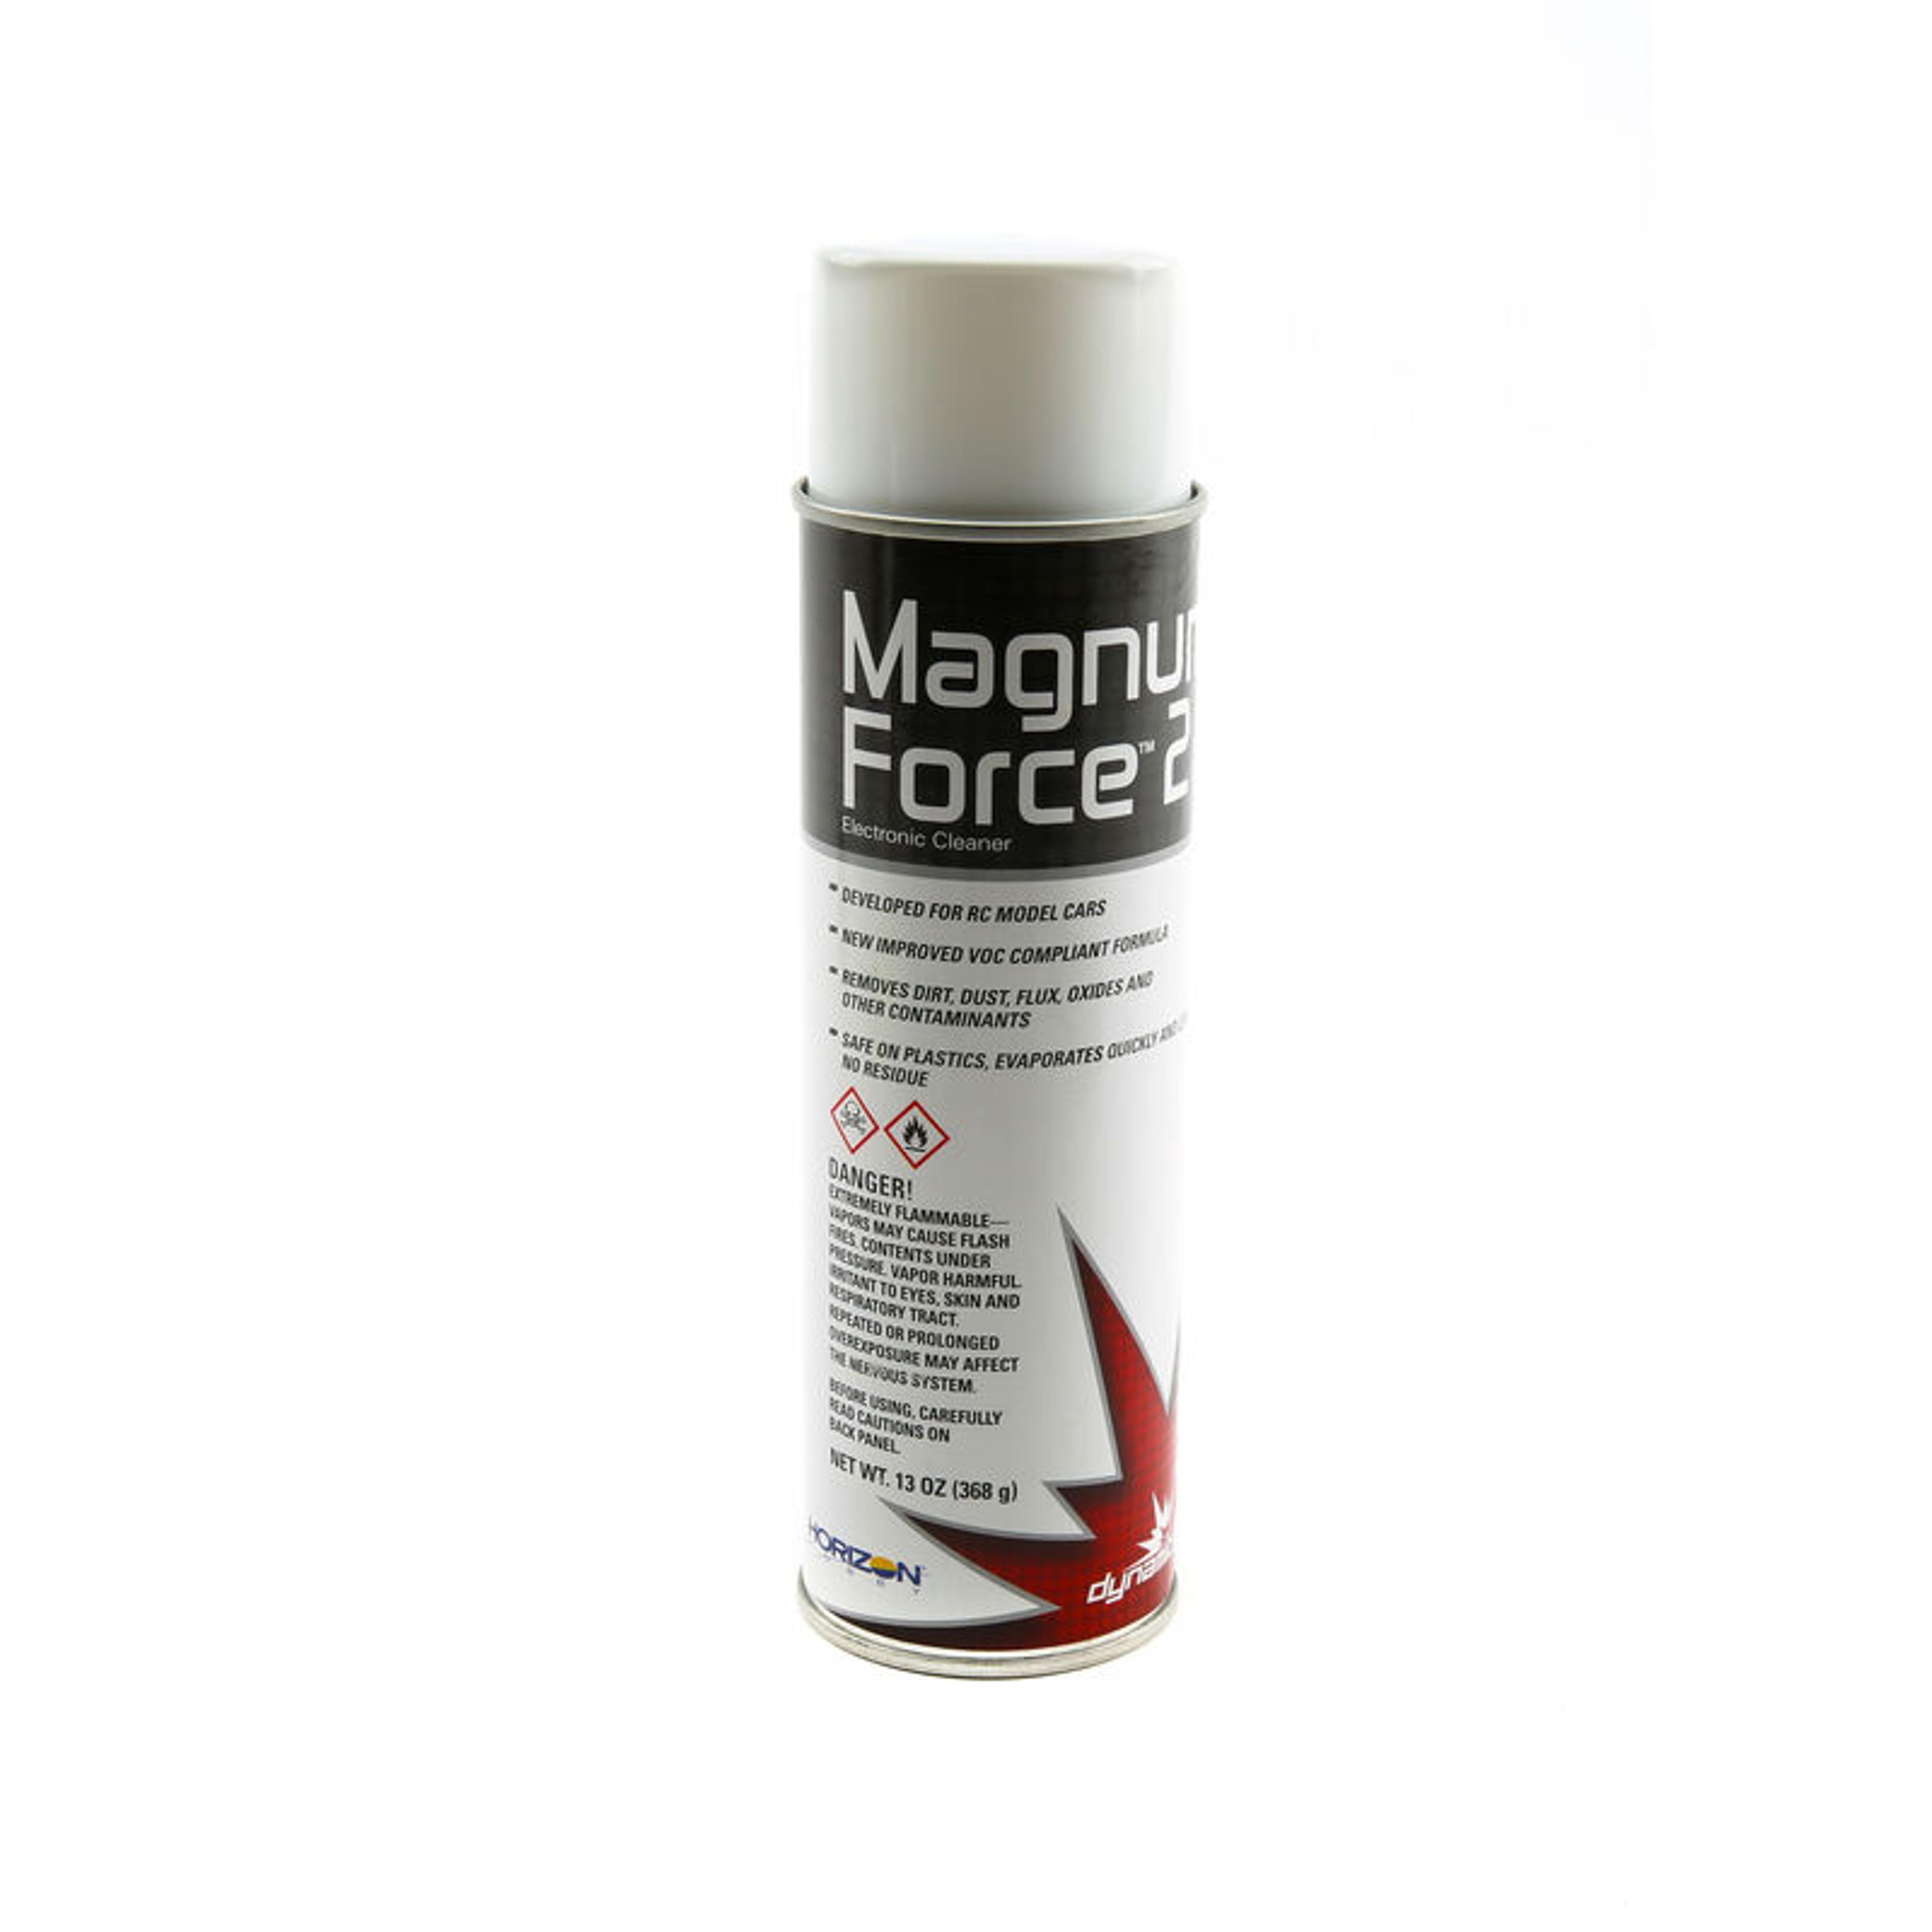 Motor Spray - Magnum Force 2 Motor Spray, 13 oz